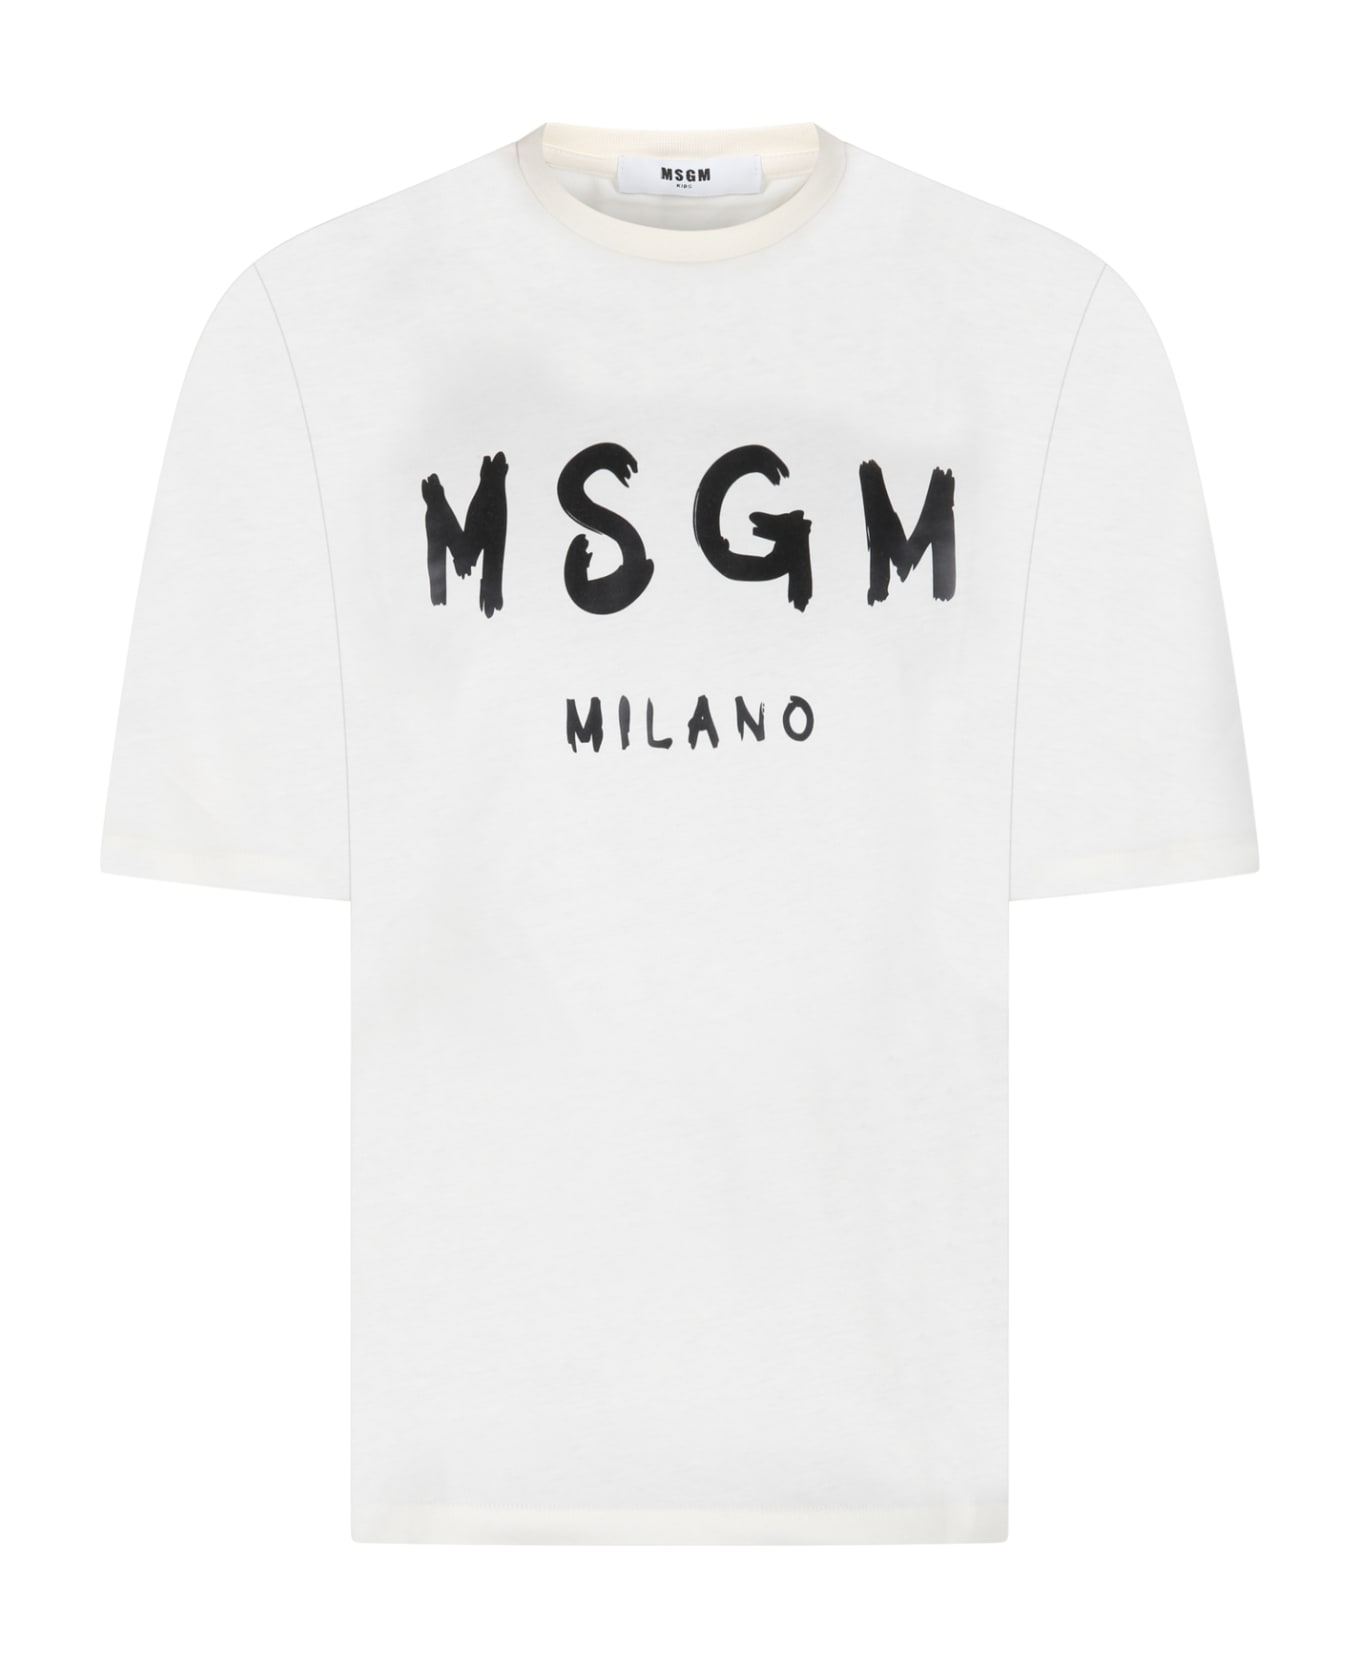 MSGM Ivory T-shirt For Kids With Black Logo - Ivory